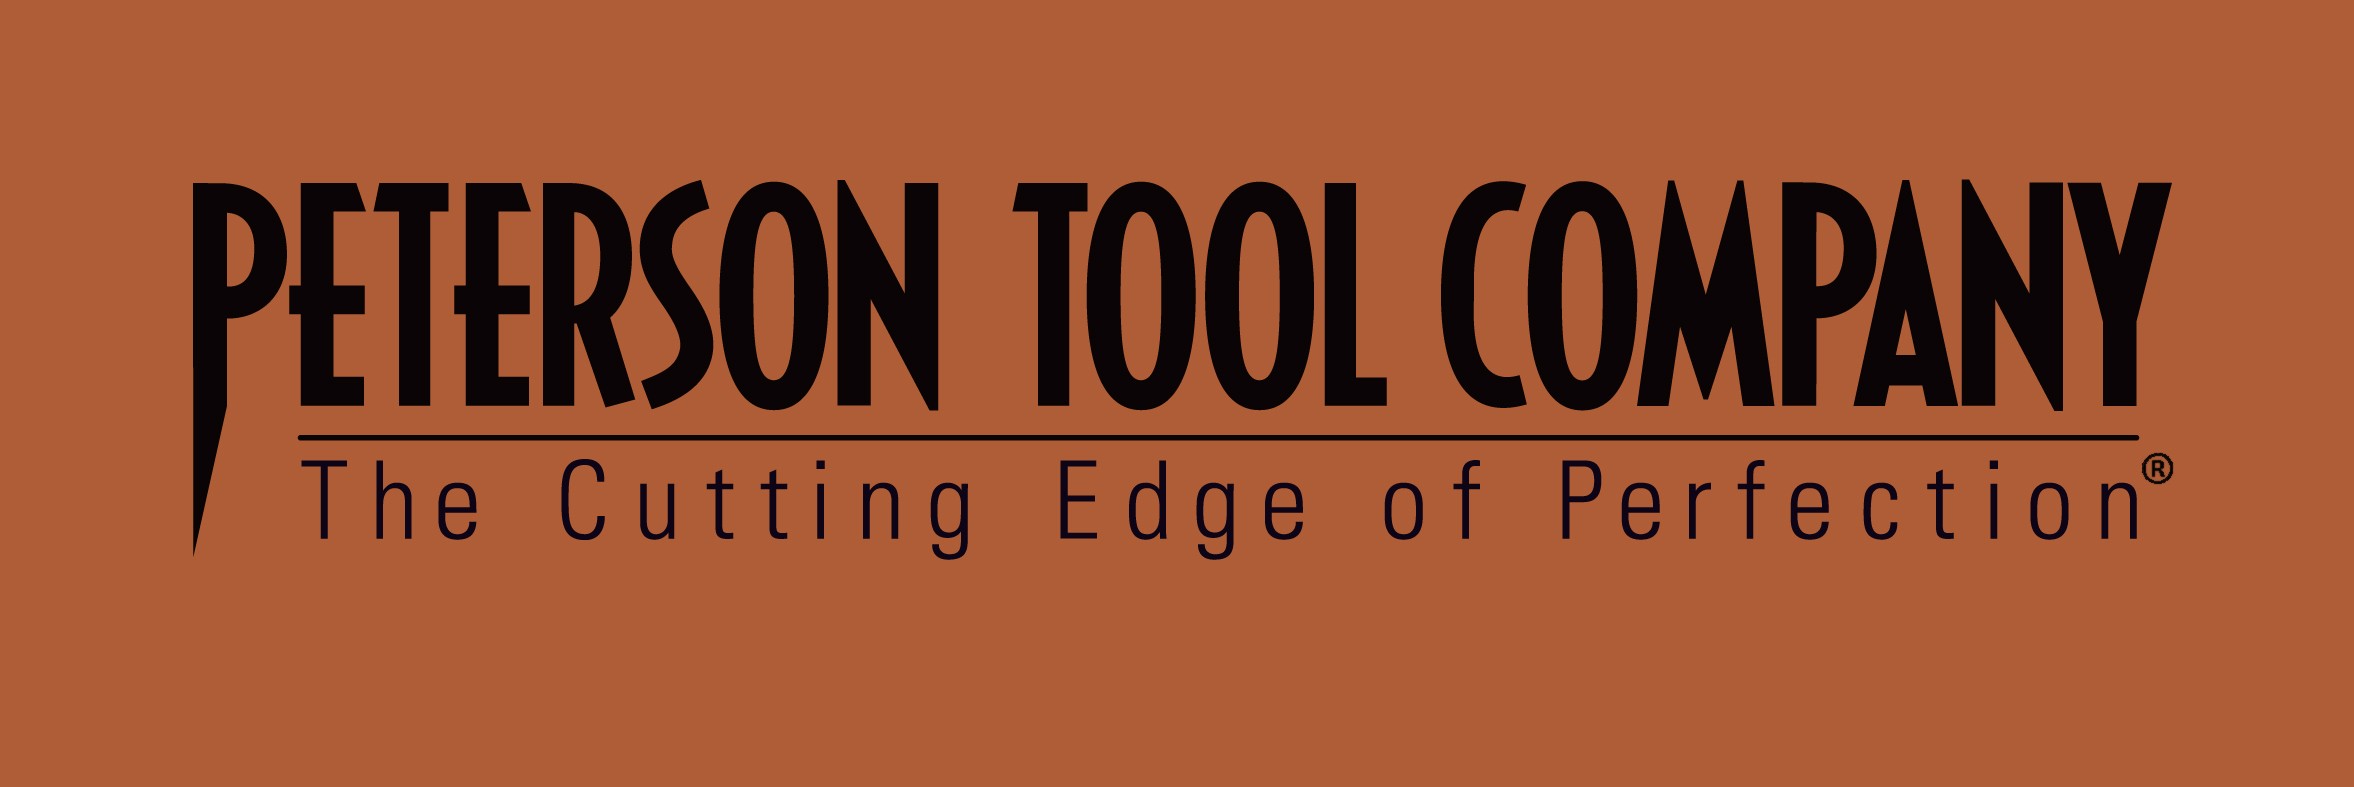 Peterson Tool Company